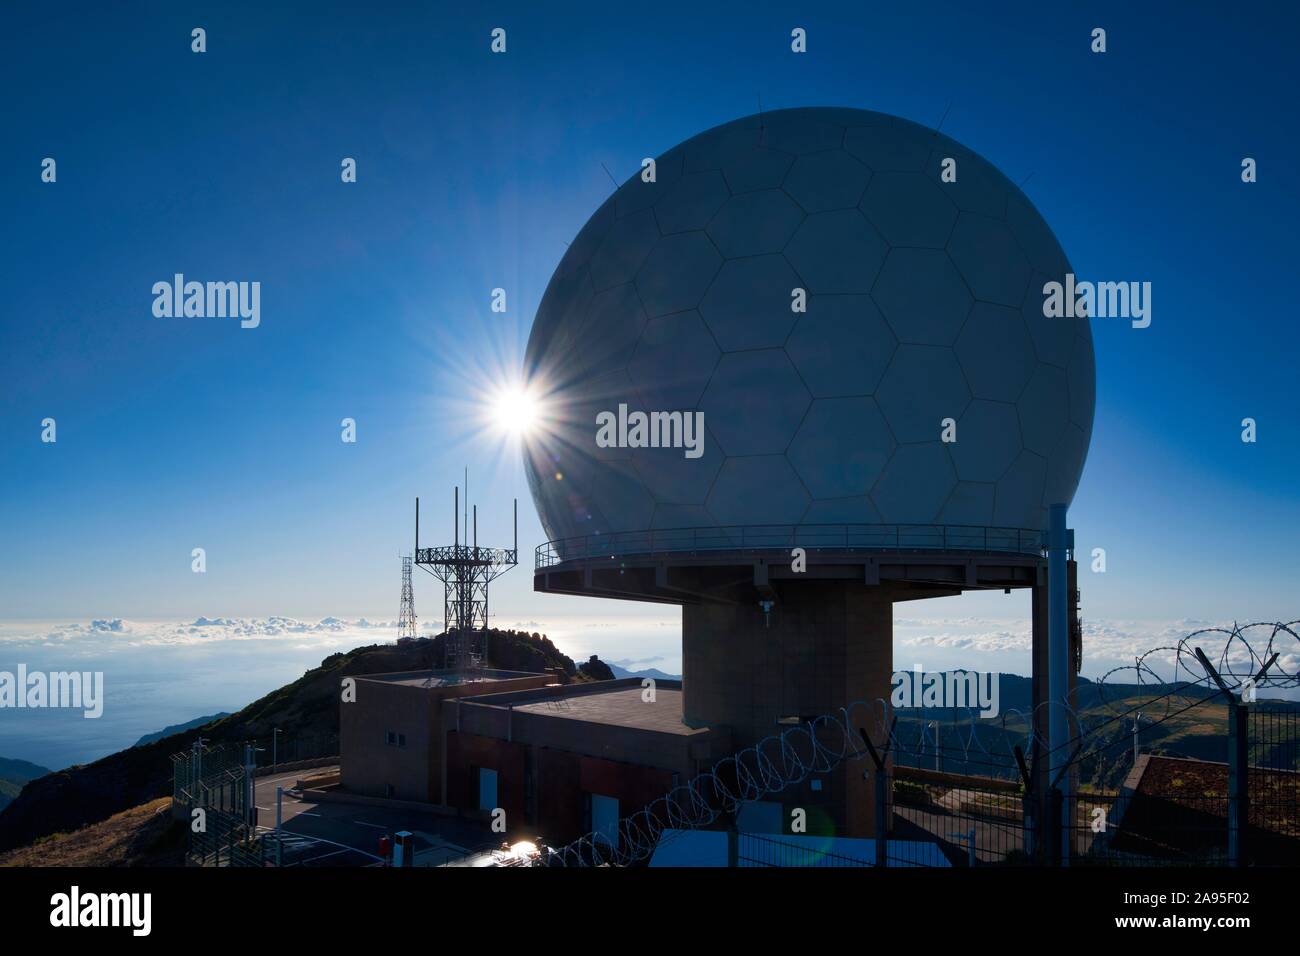 Forca Aerea Observatoire sur le Pico do Arieiro, Parque Natural da Madeira, Madère, Portugal Banque D'Images